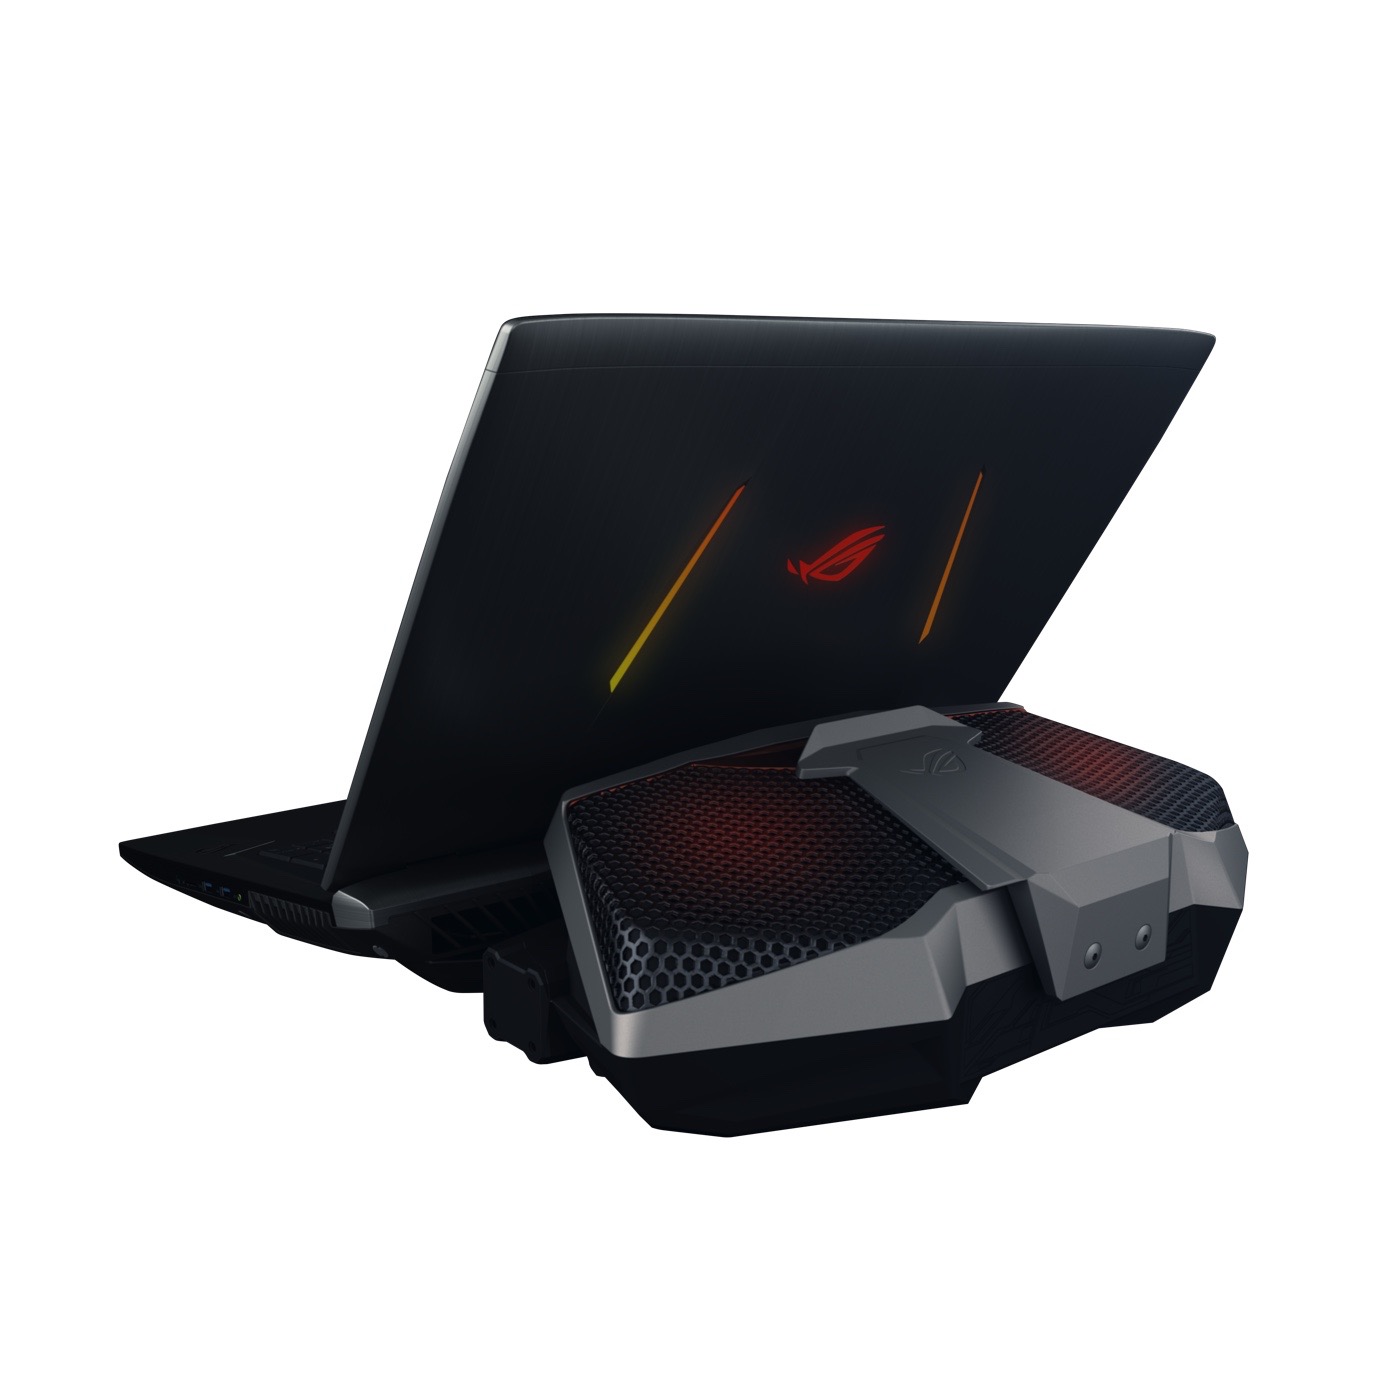 ASUS upgrades its crazy ROG liquid-cooled gaming laptop